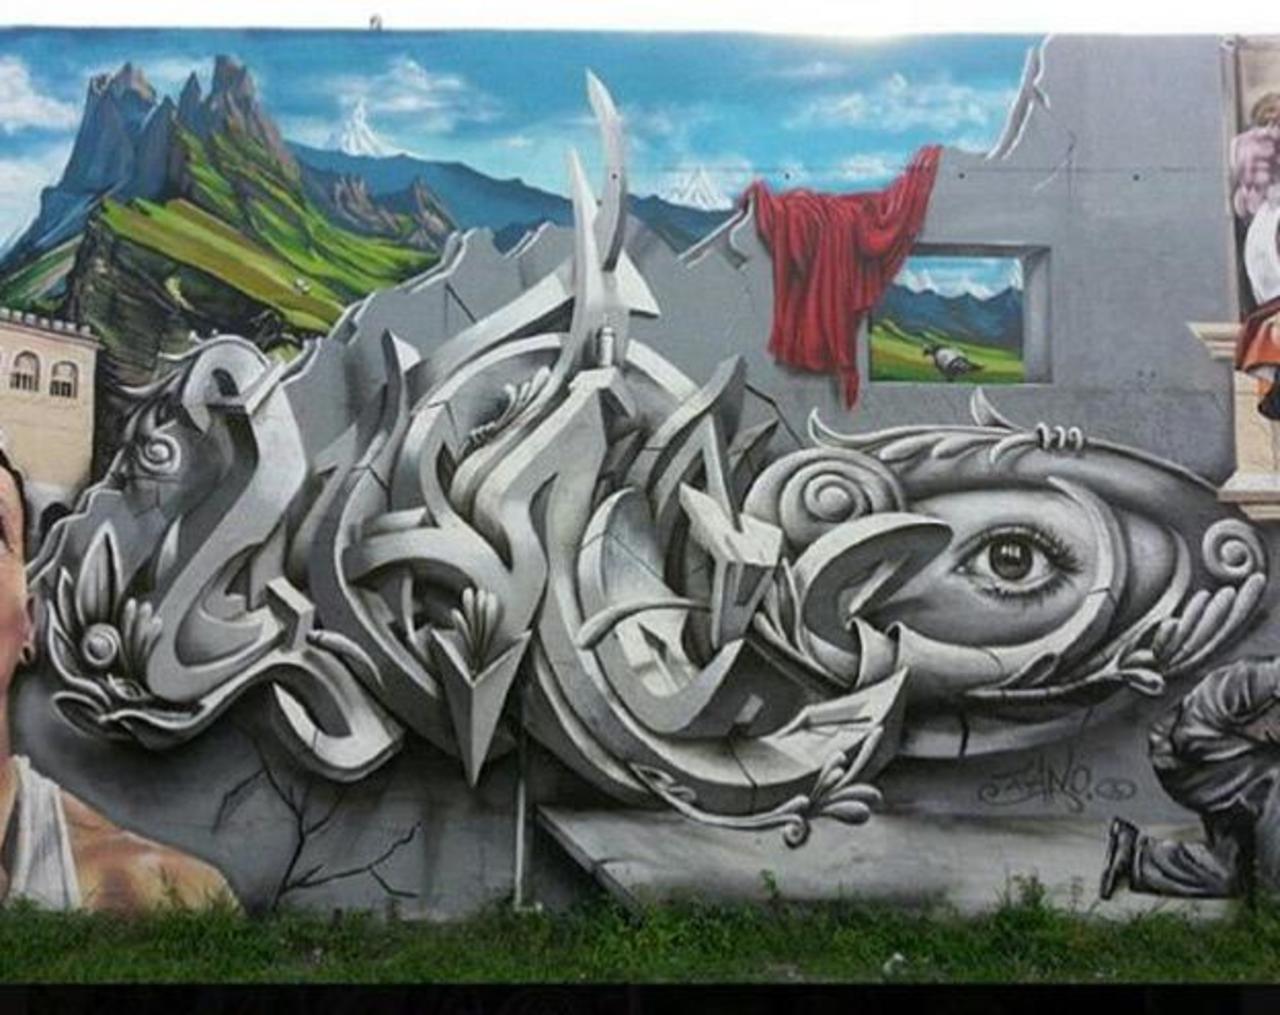 Street Art by Smog One

#art #mural #graffiti #streetart http://t.co/af53ozNeLW